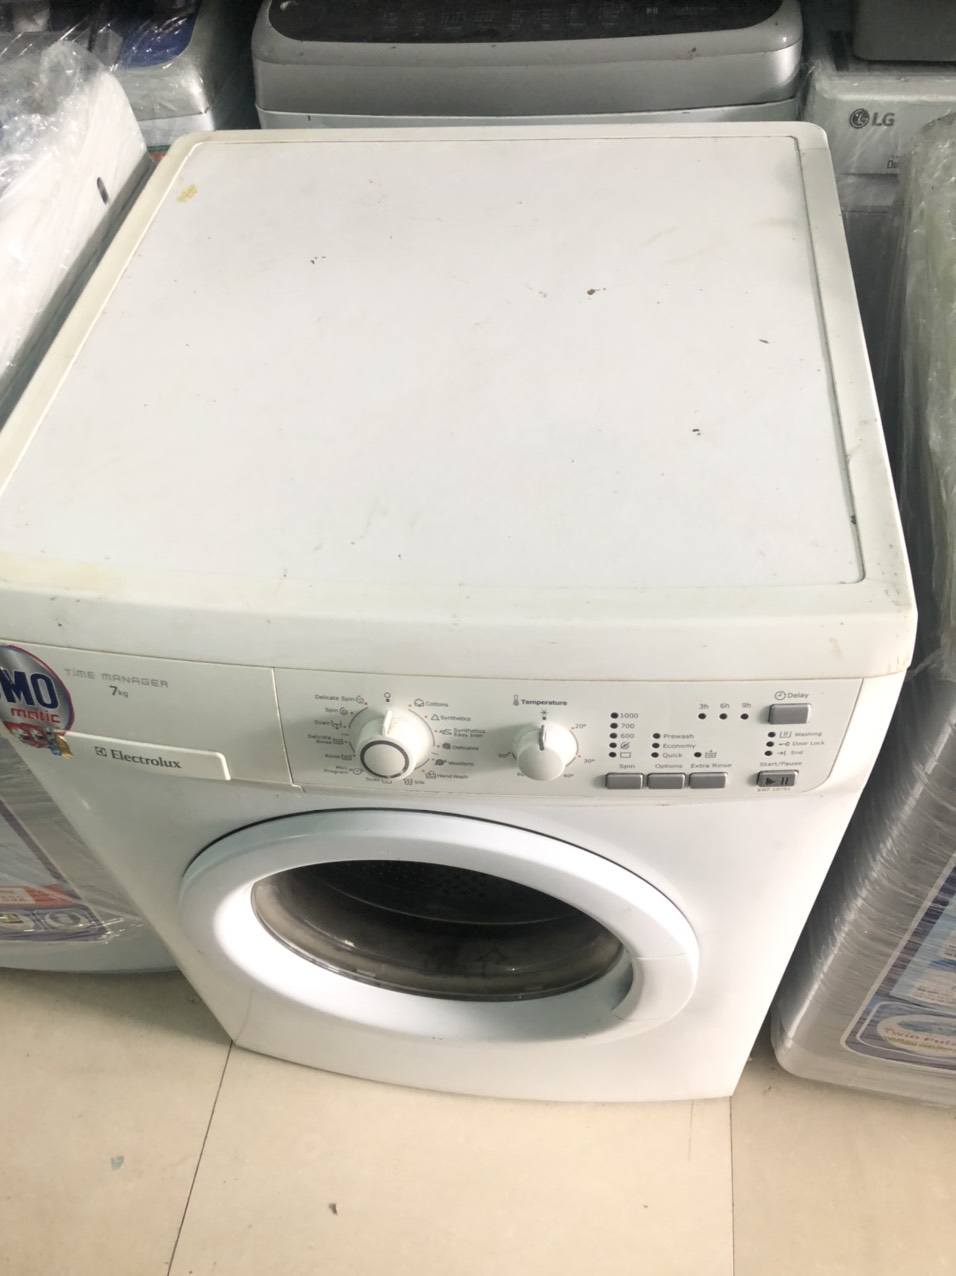 Tay nắm cửa máy giặt Electrolux EWF 85761 - 7kg | Shopee Việt Nam